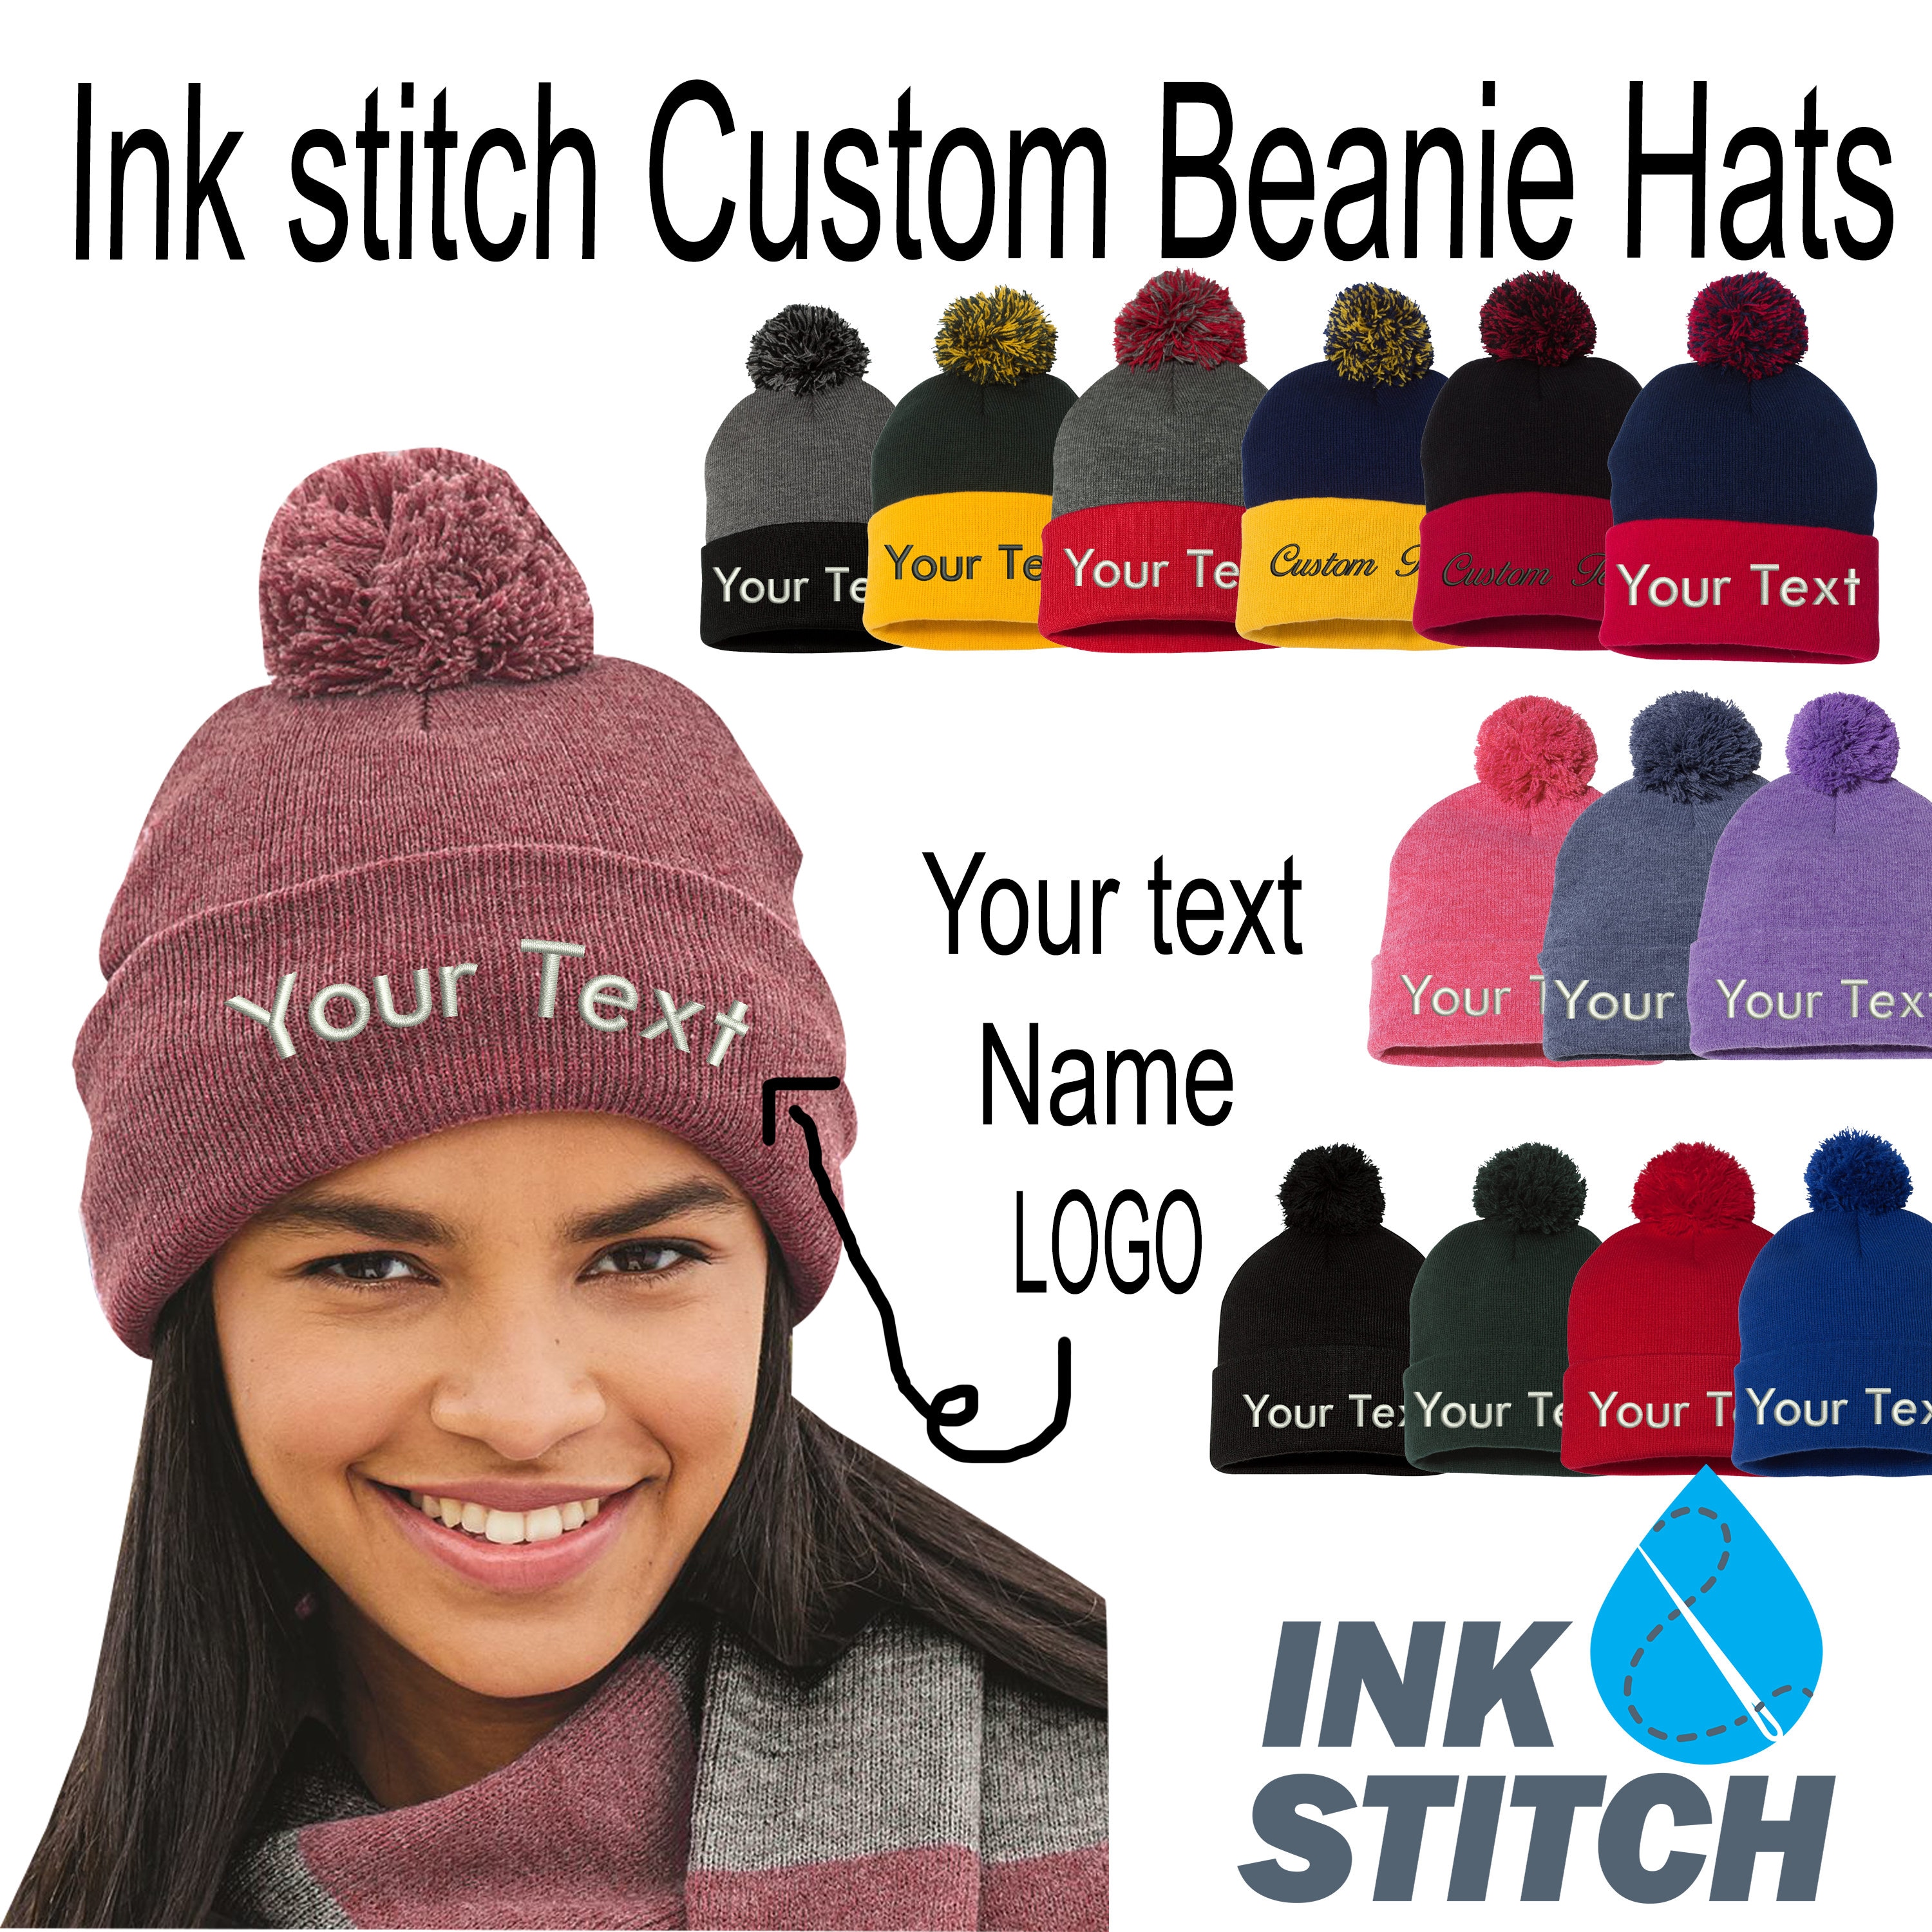 hver dag Blandet optager Ink Stitch SP15 Custom Beanie Personalized Pom Pom Winter | Etsy